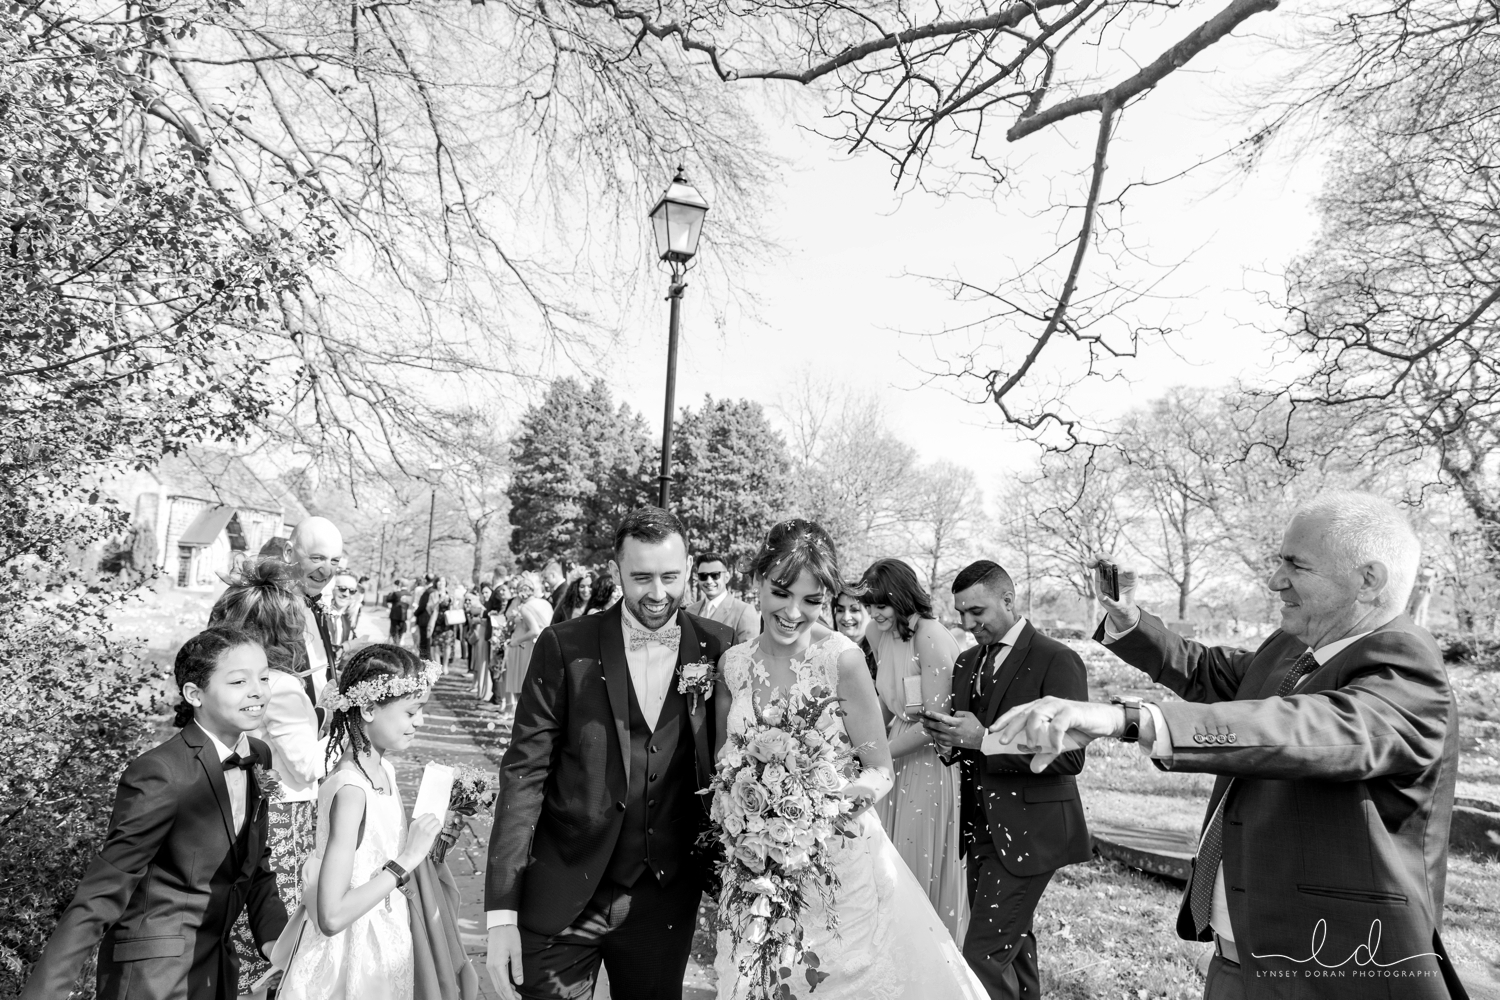 Weddings at Wharfedale Grange